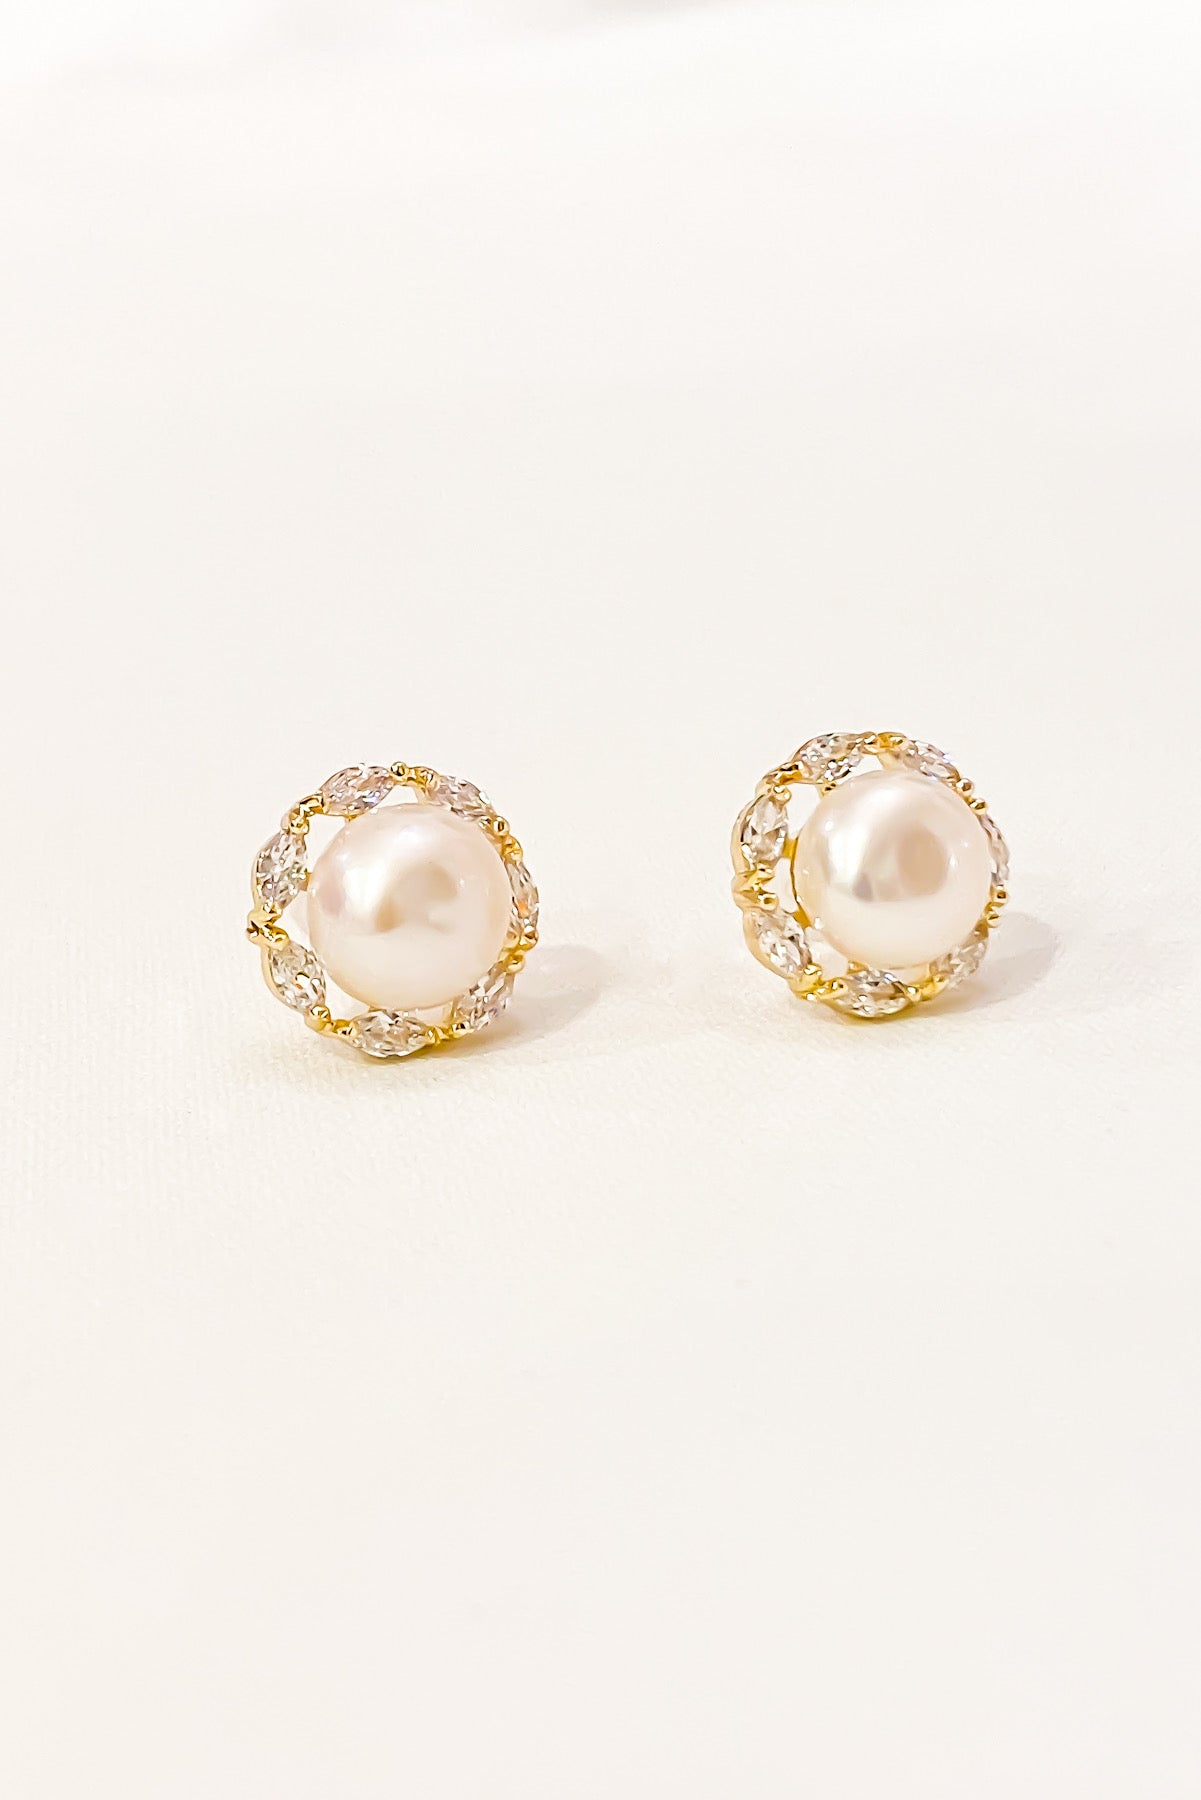 SKYE San Francisco Shop SF Chic Modern Elegant Classy Women Jewelry French Parisian Minimalist Cosette 18K Gold Pearl Earrings